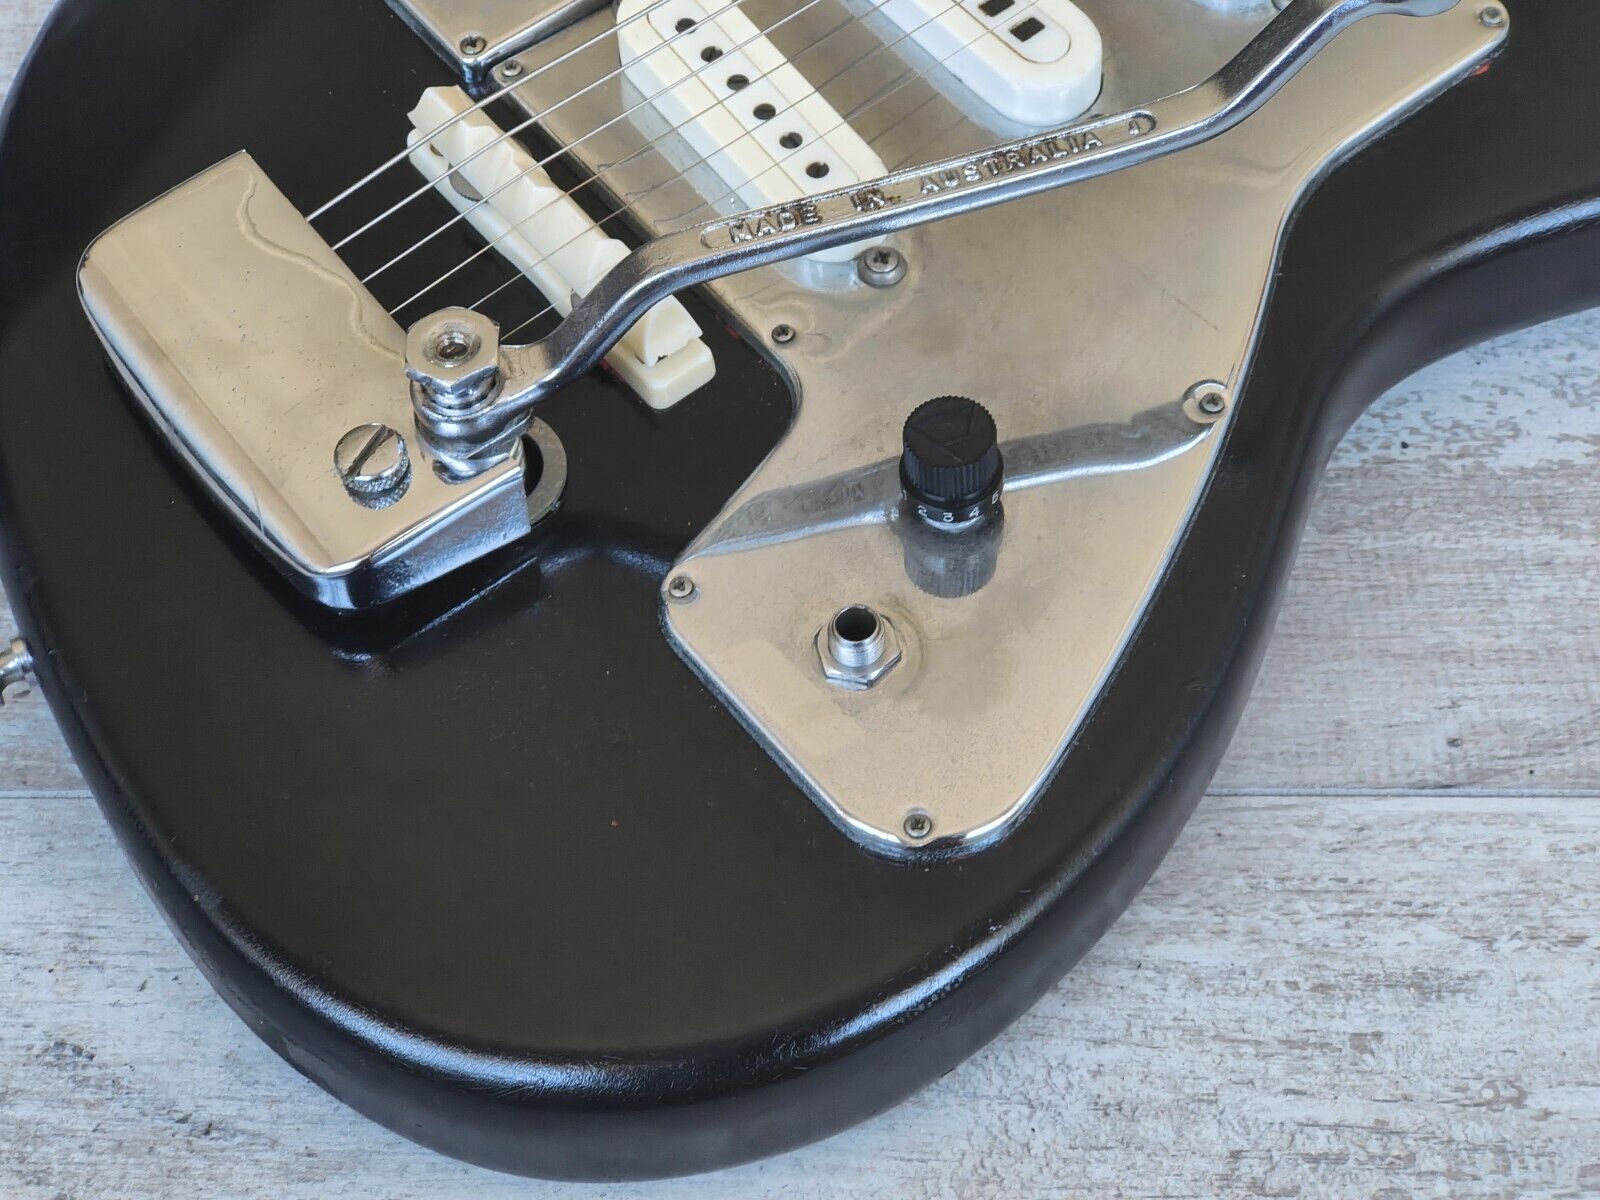 1964 Guyatone Japan LG-130T Vintage Guitar (Refinished Black)